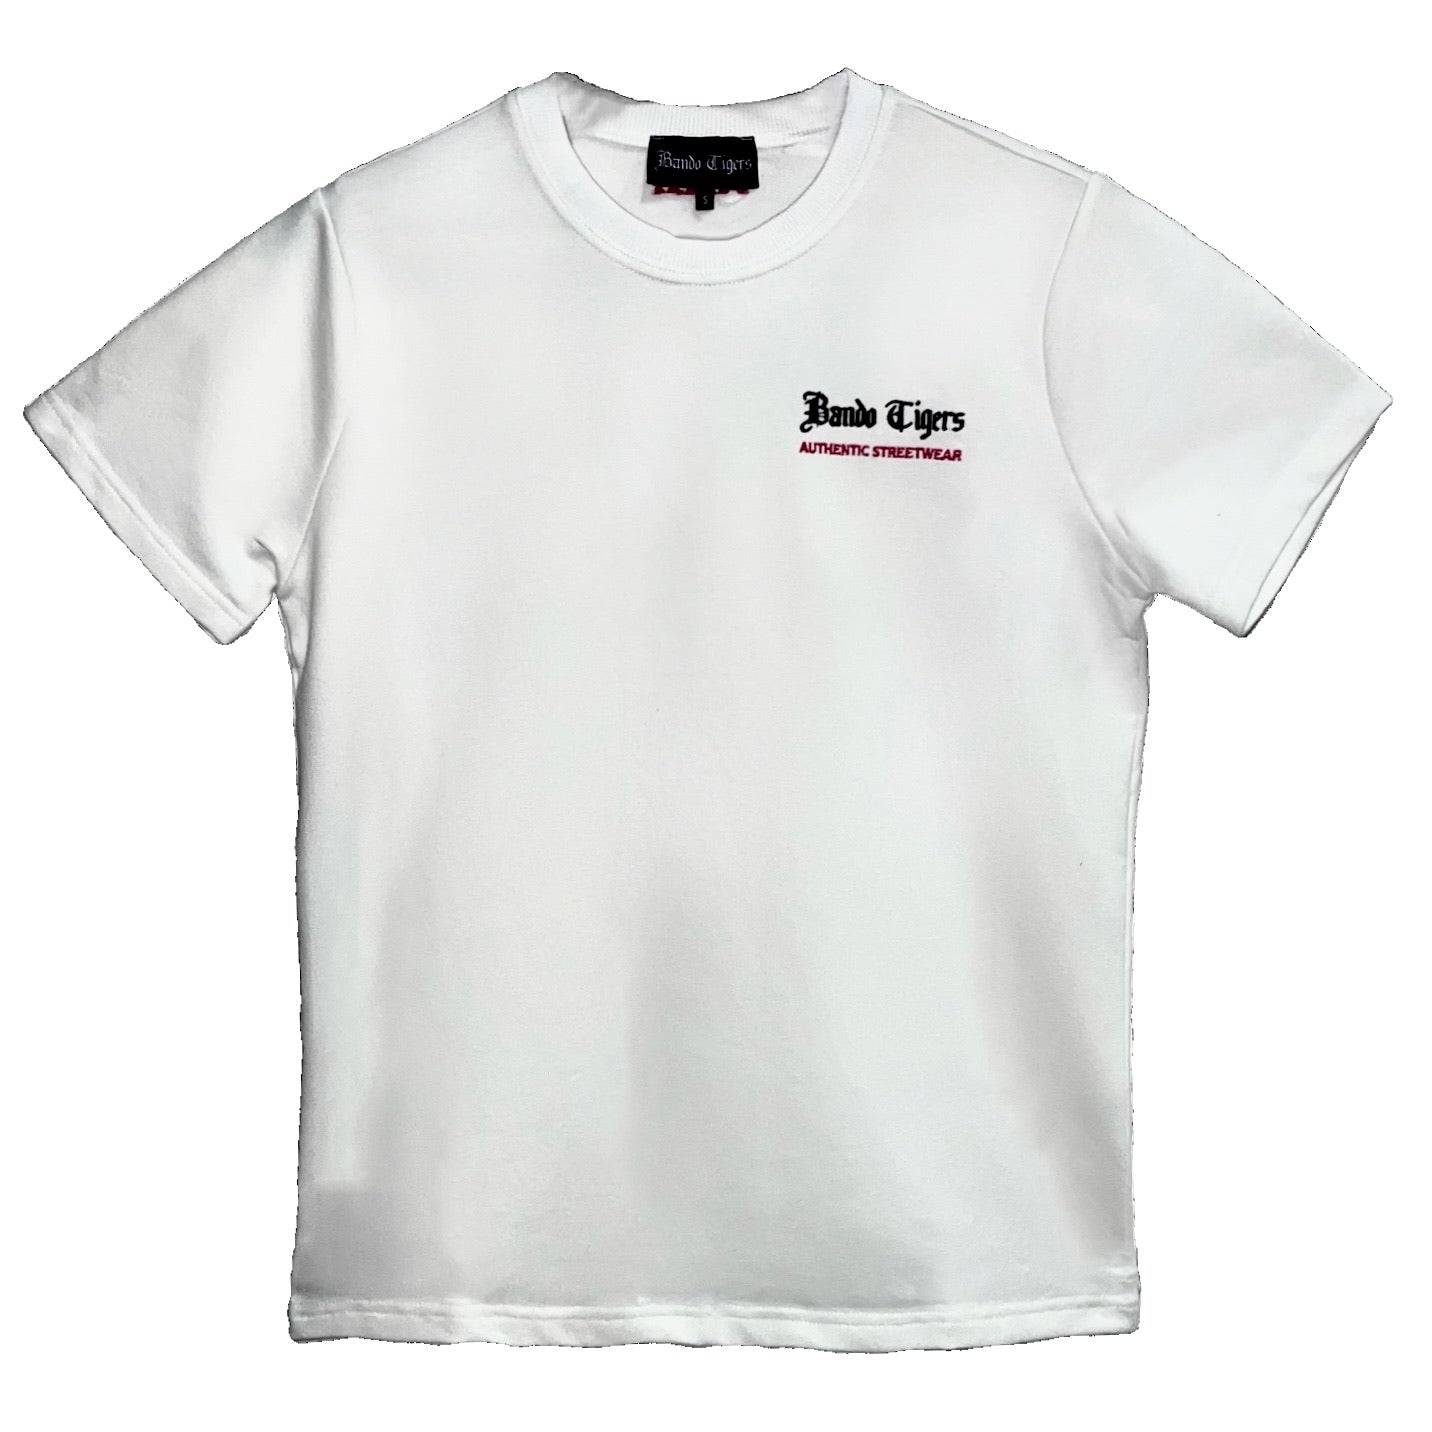 Stone-White Amsterdam edition T-shirt